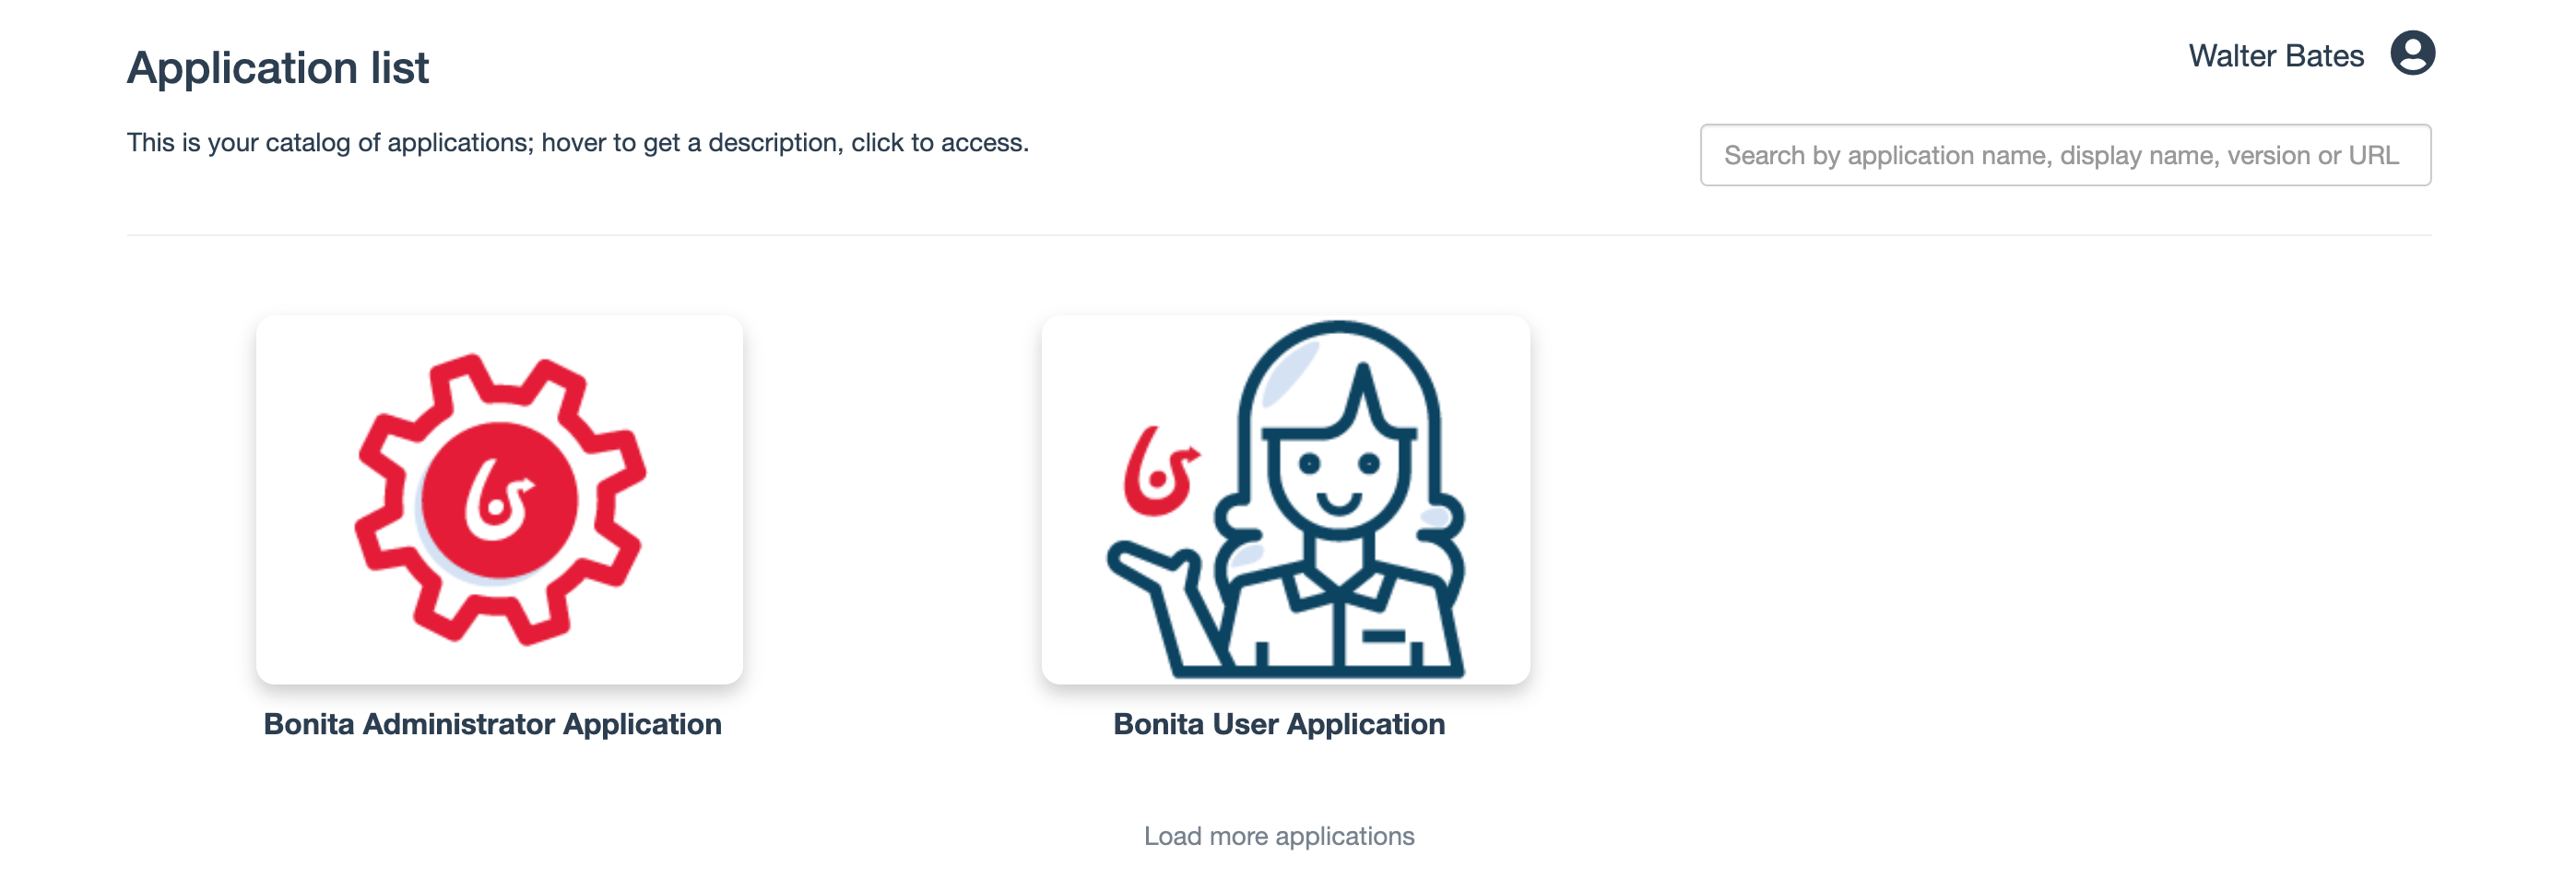 Bonita Application display in a web browser